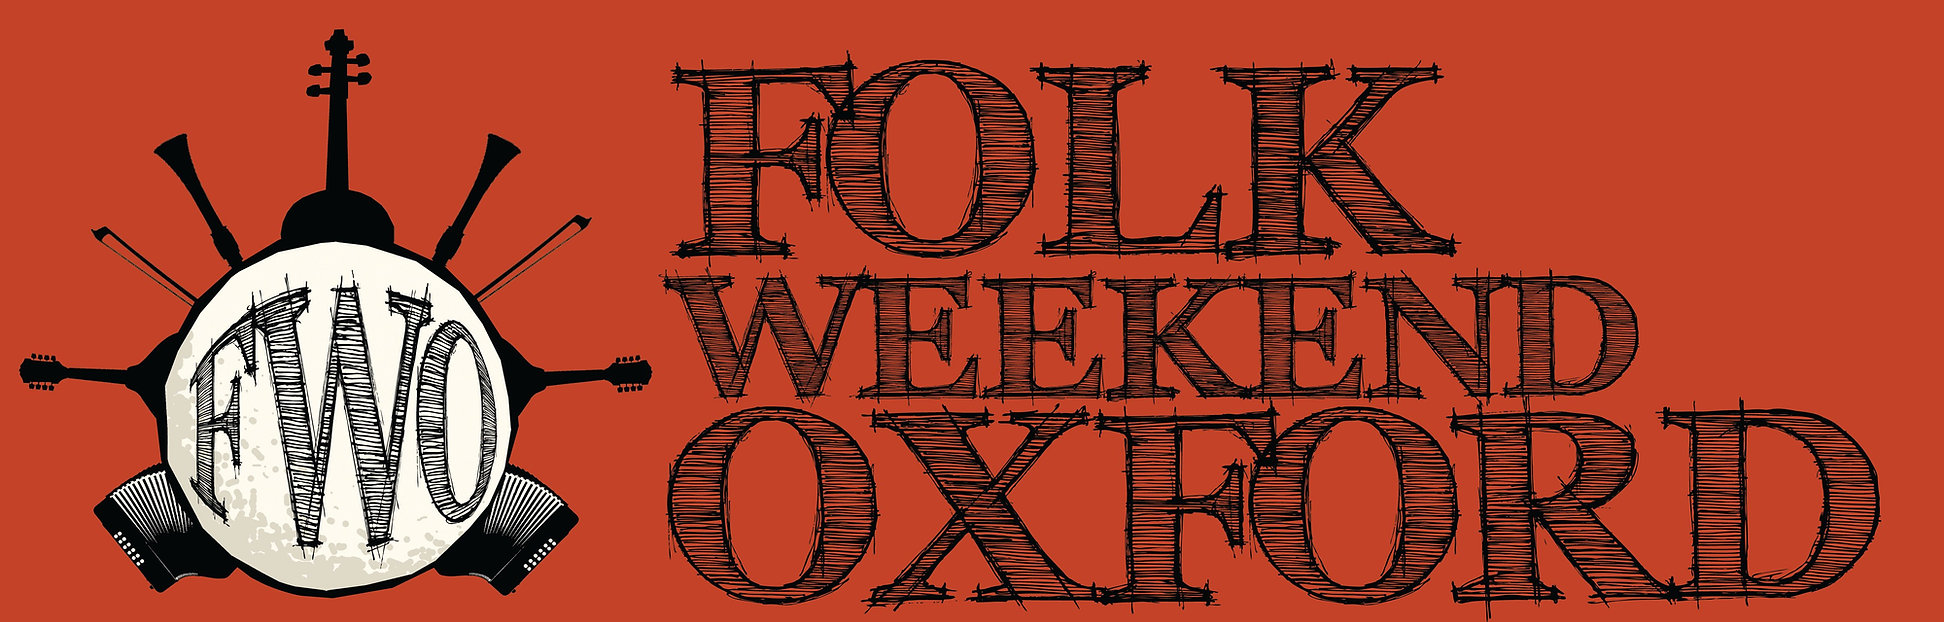 Folk Weekend Oxford banner